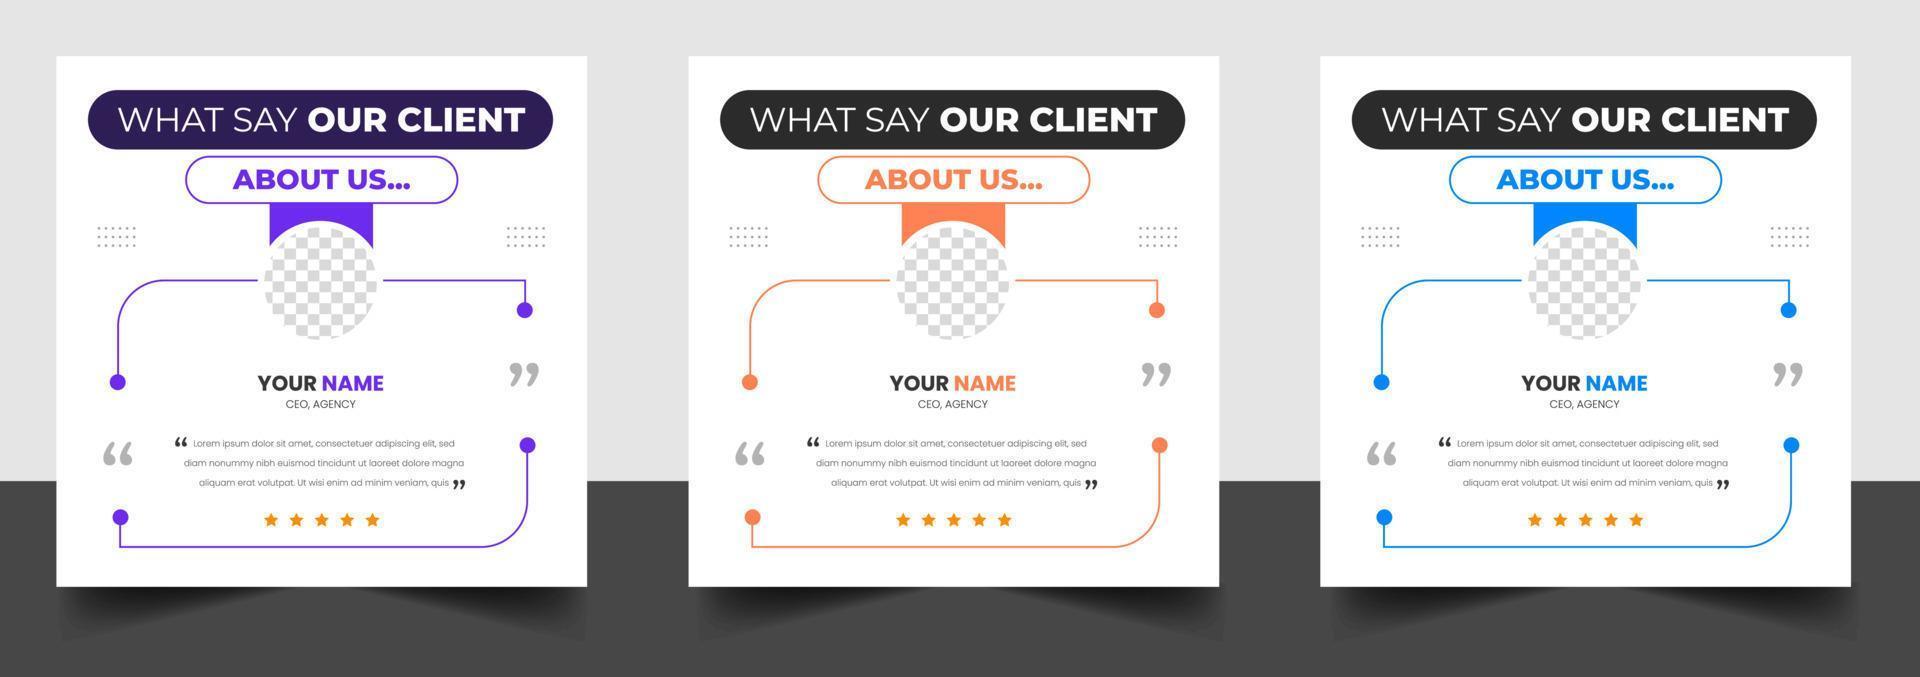 Customer feedback testimonial social media post web banner template. client testimonials social media post banner design template with purple, blue and yellow color. vector